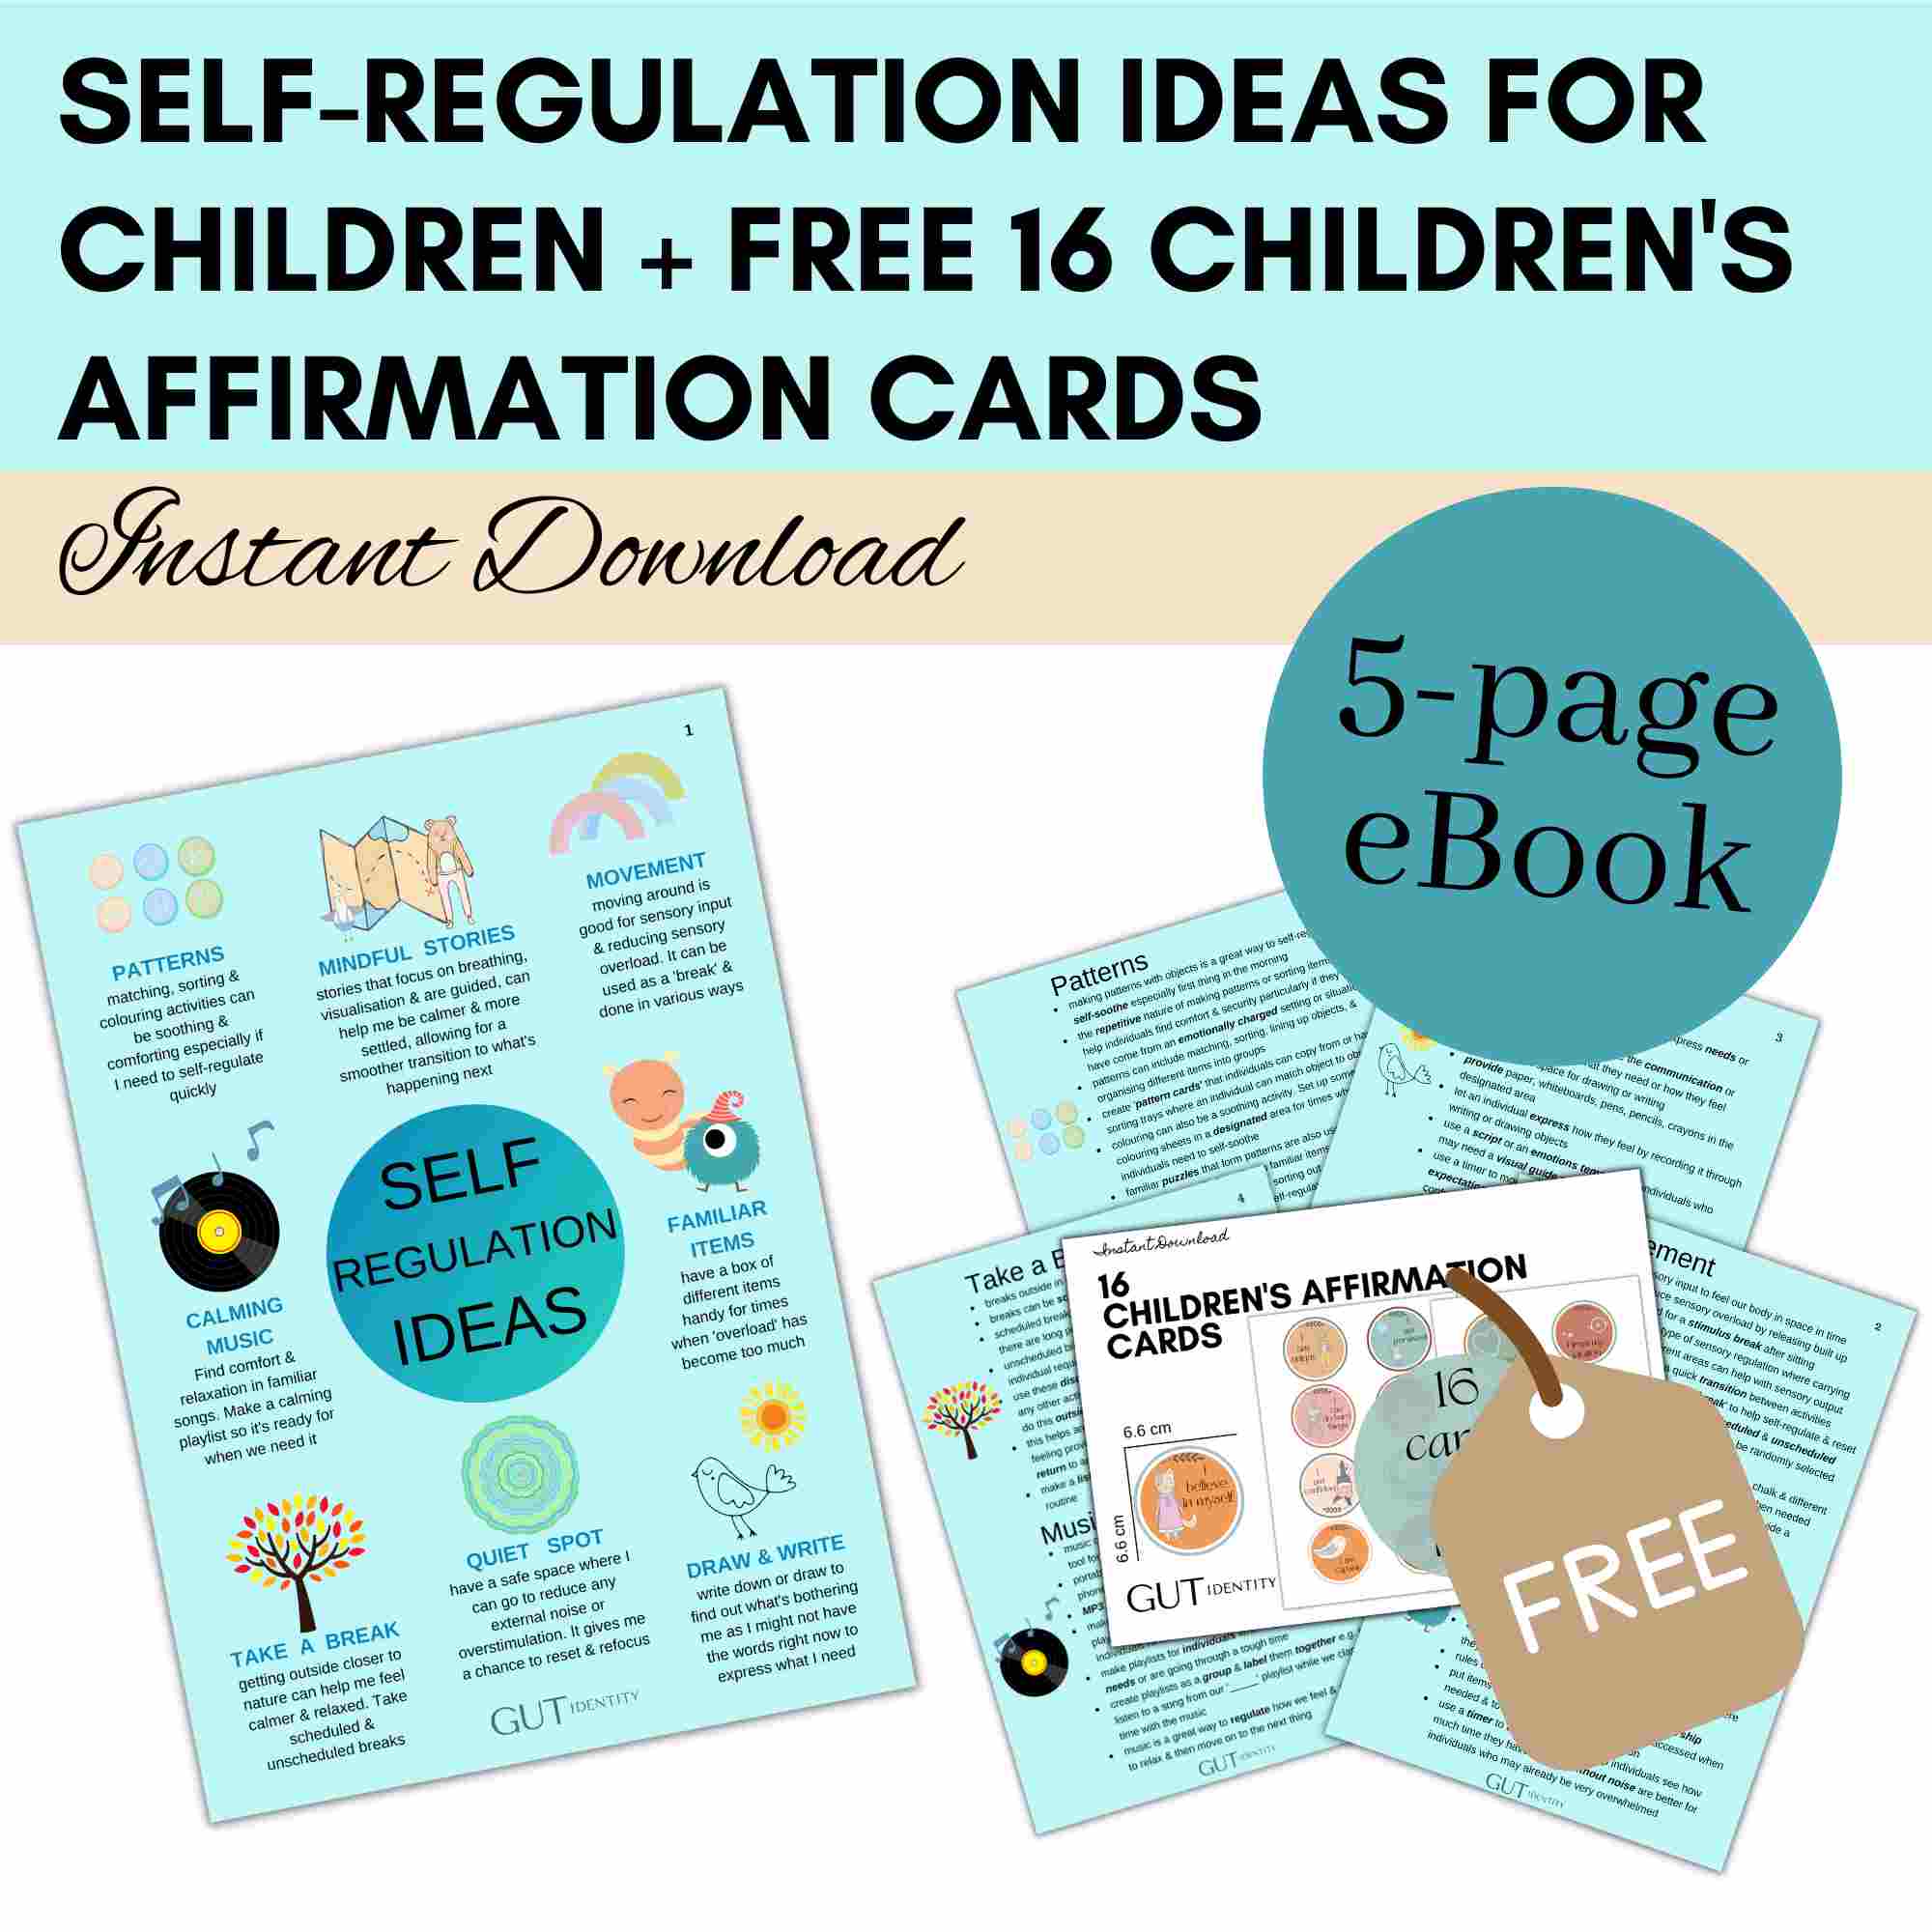 Self-Regulation Ideas for Children by Gutidentity